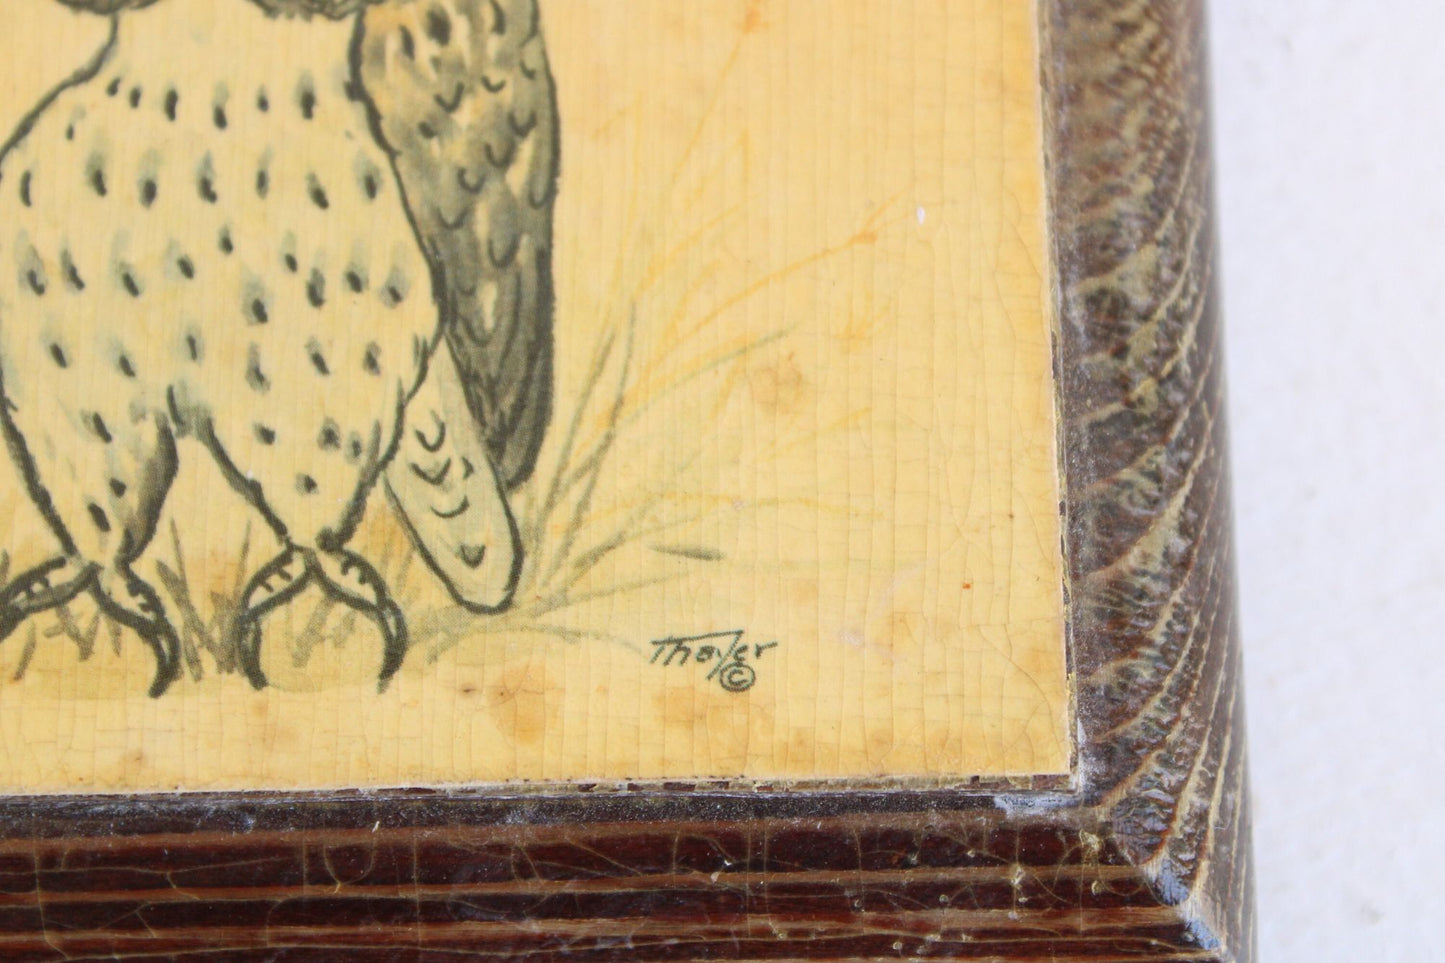 Vintage 1970s Prints, Owls Decoupaged on Wood